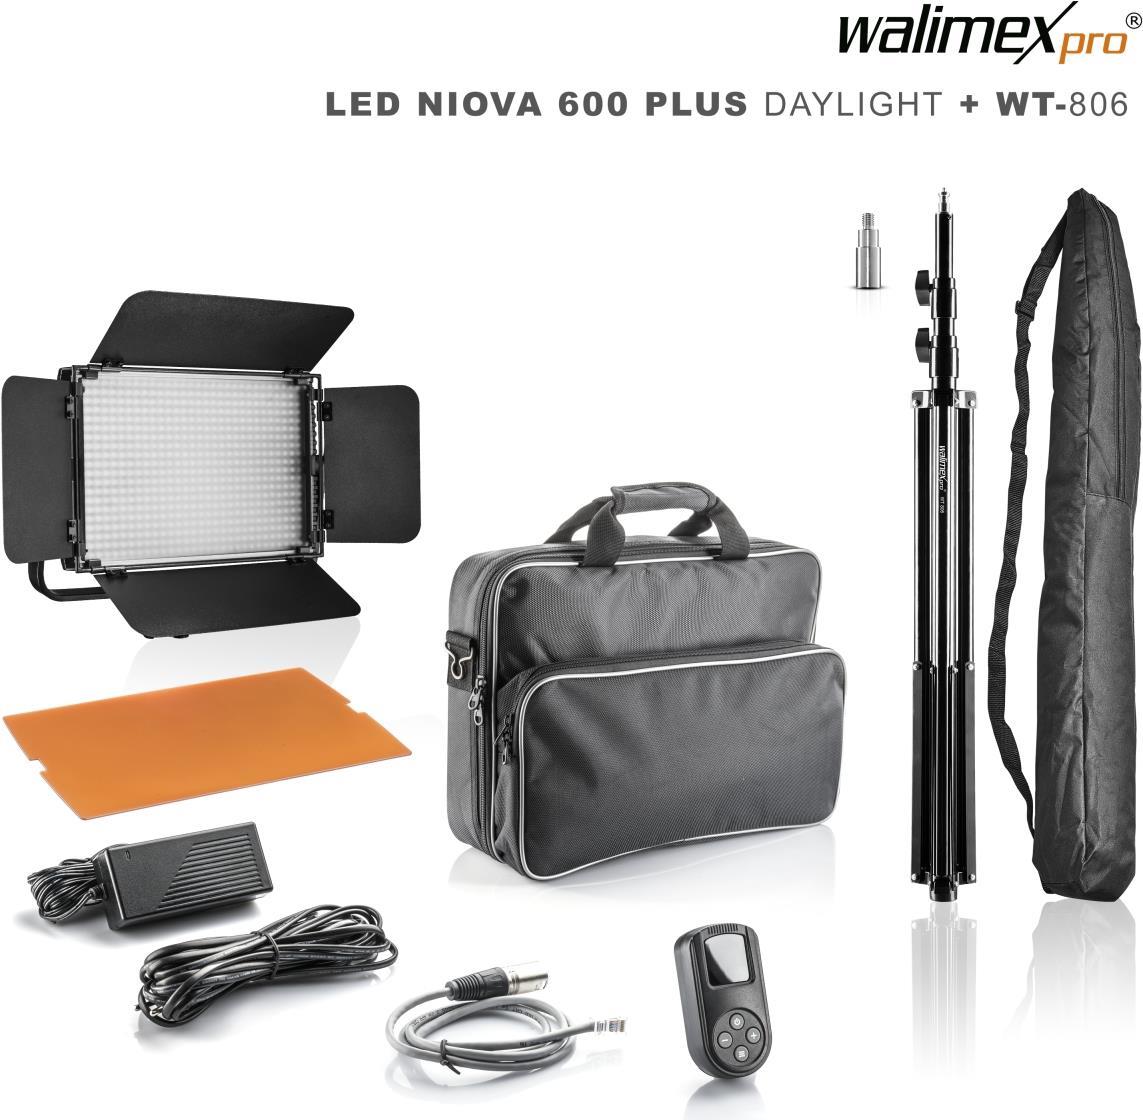 WALSER Walimex pro LED Niova 600 Plus Daylight + Stativ WT-806 (22996)